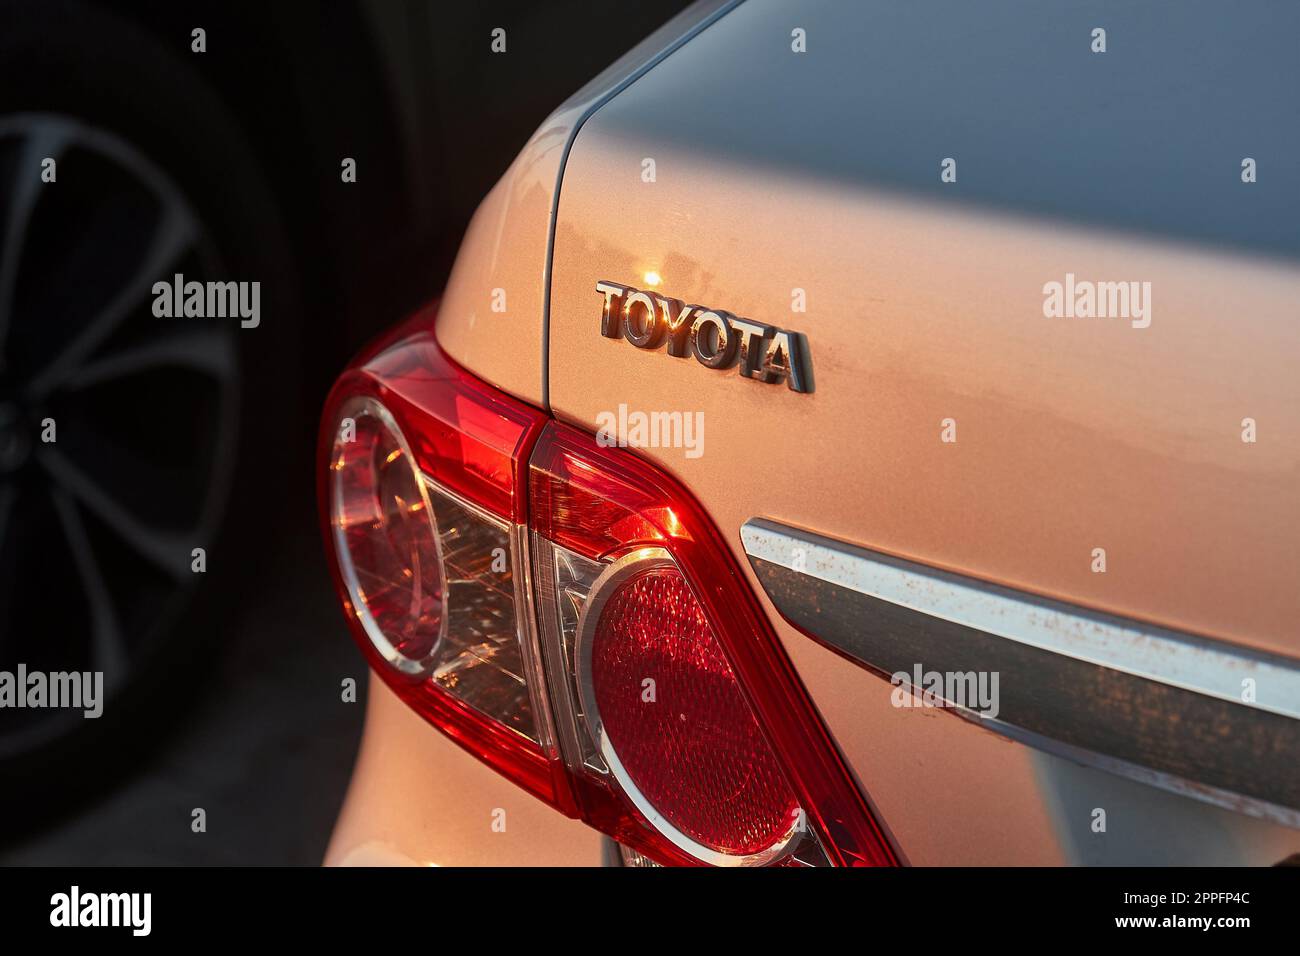 Toyota logo label closeup Stock Photo